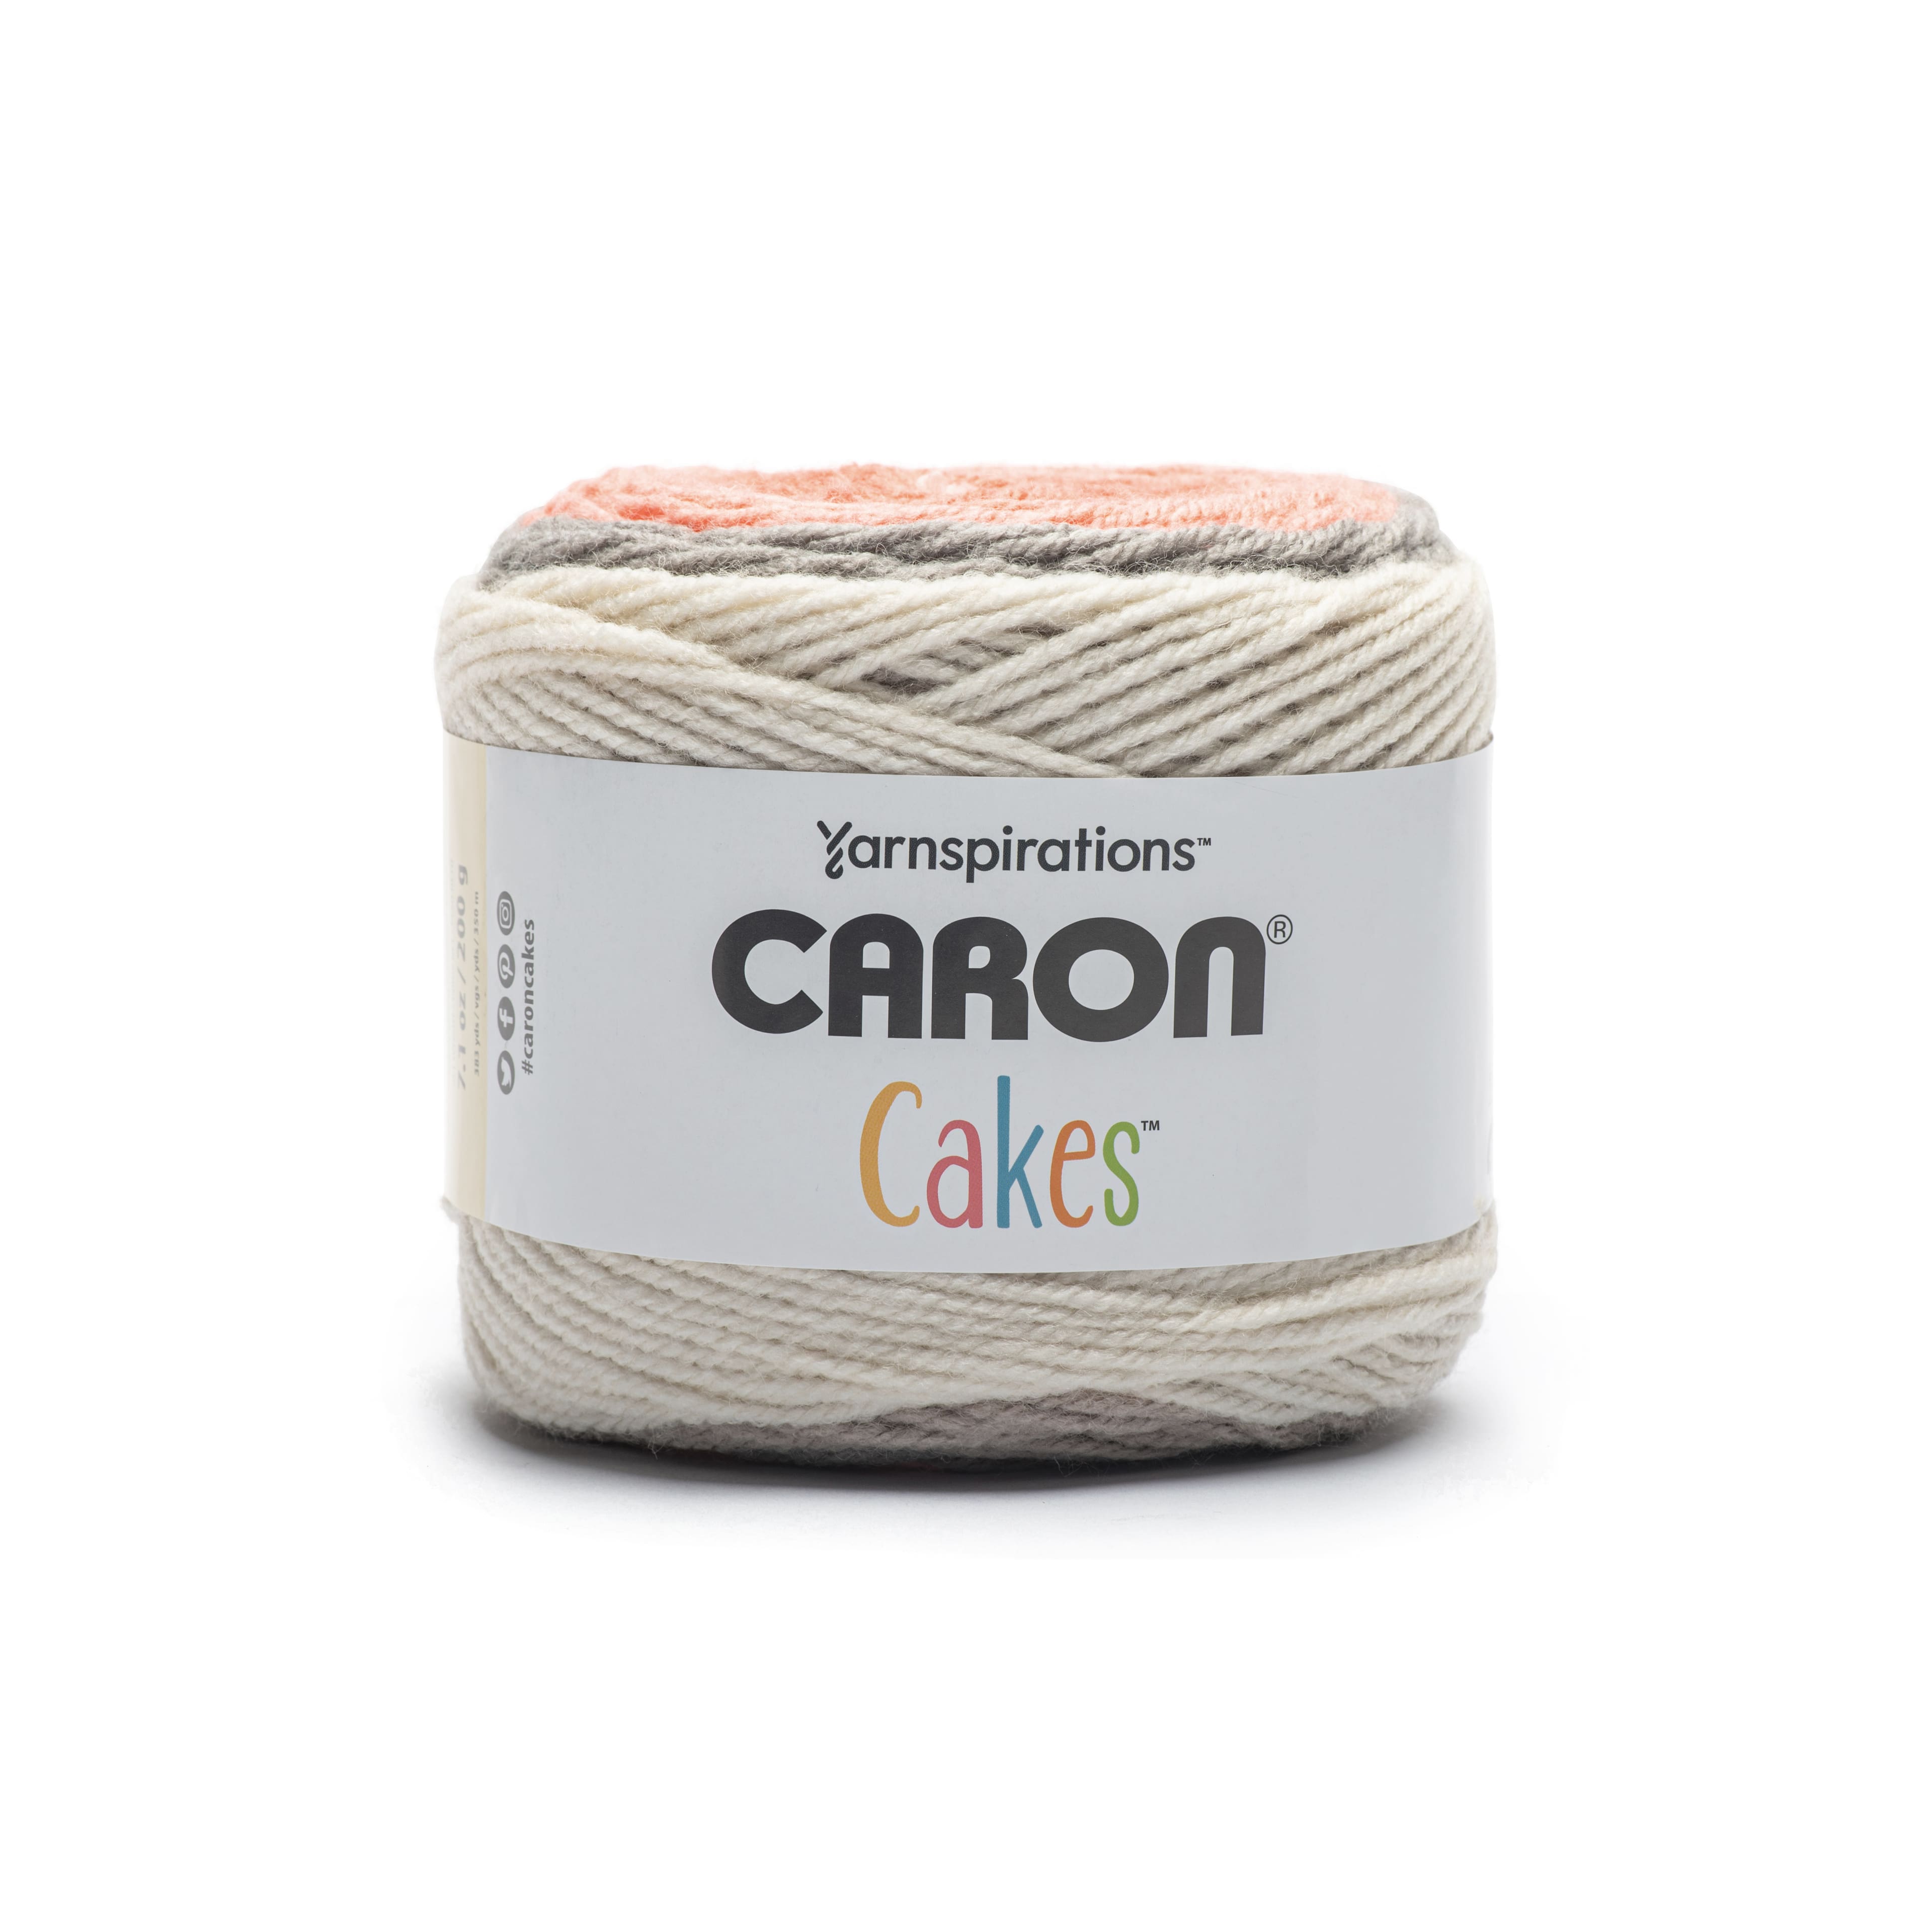  Caron Cloud Cakes : Arts, Crafts & Sewing